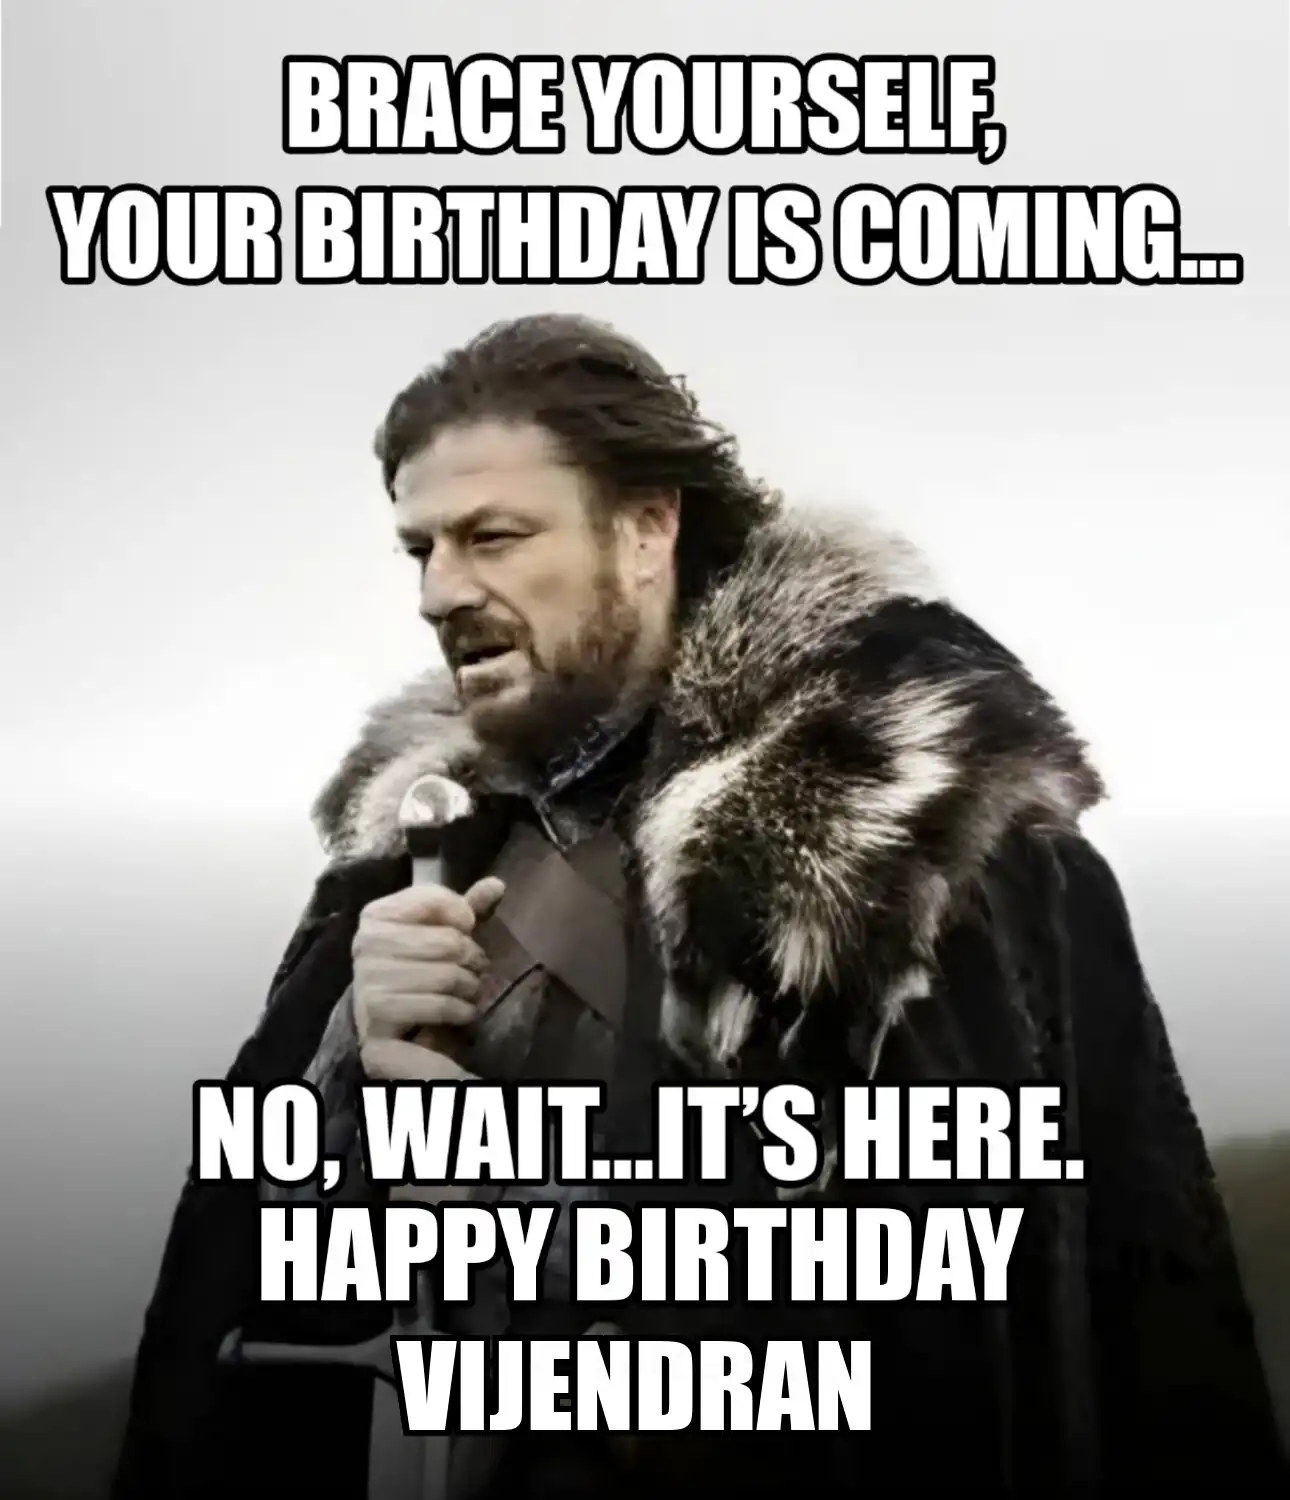 Happy Birthday Vijendran Brace Yourself Your Birthday Is Coming Meme